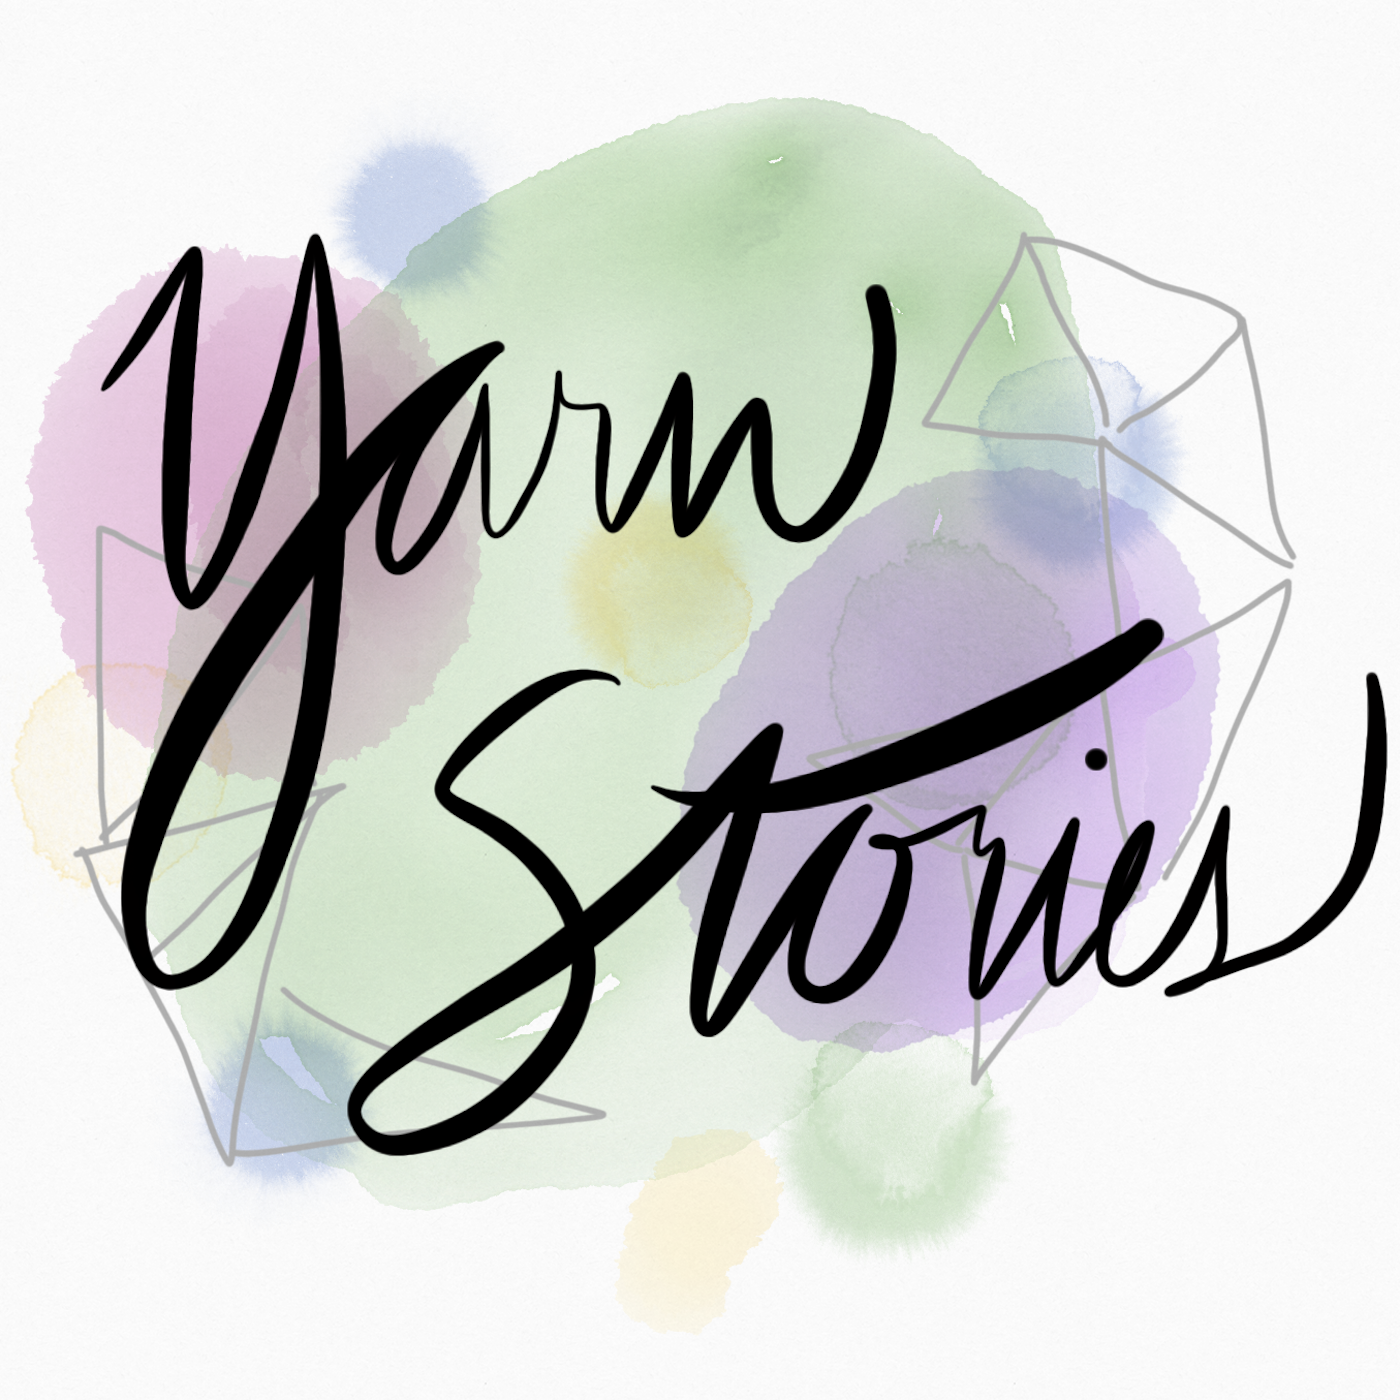 YarnStories Podcast